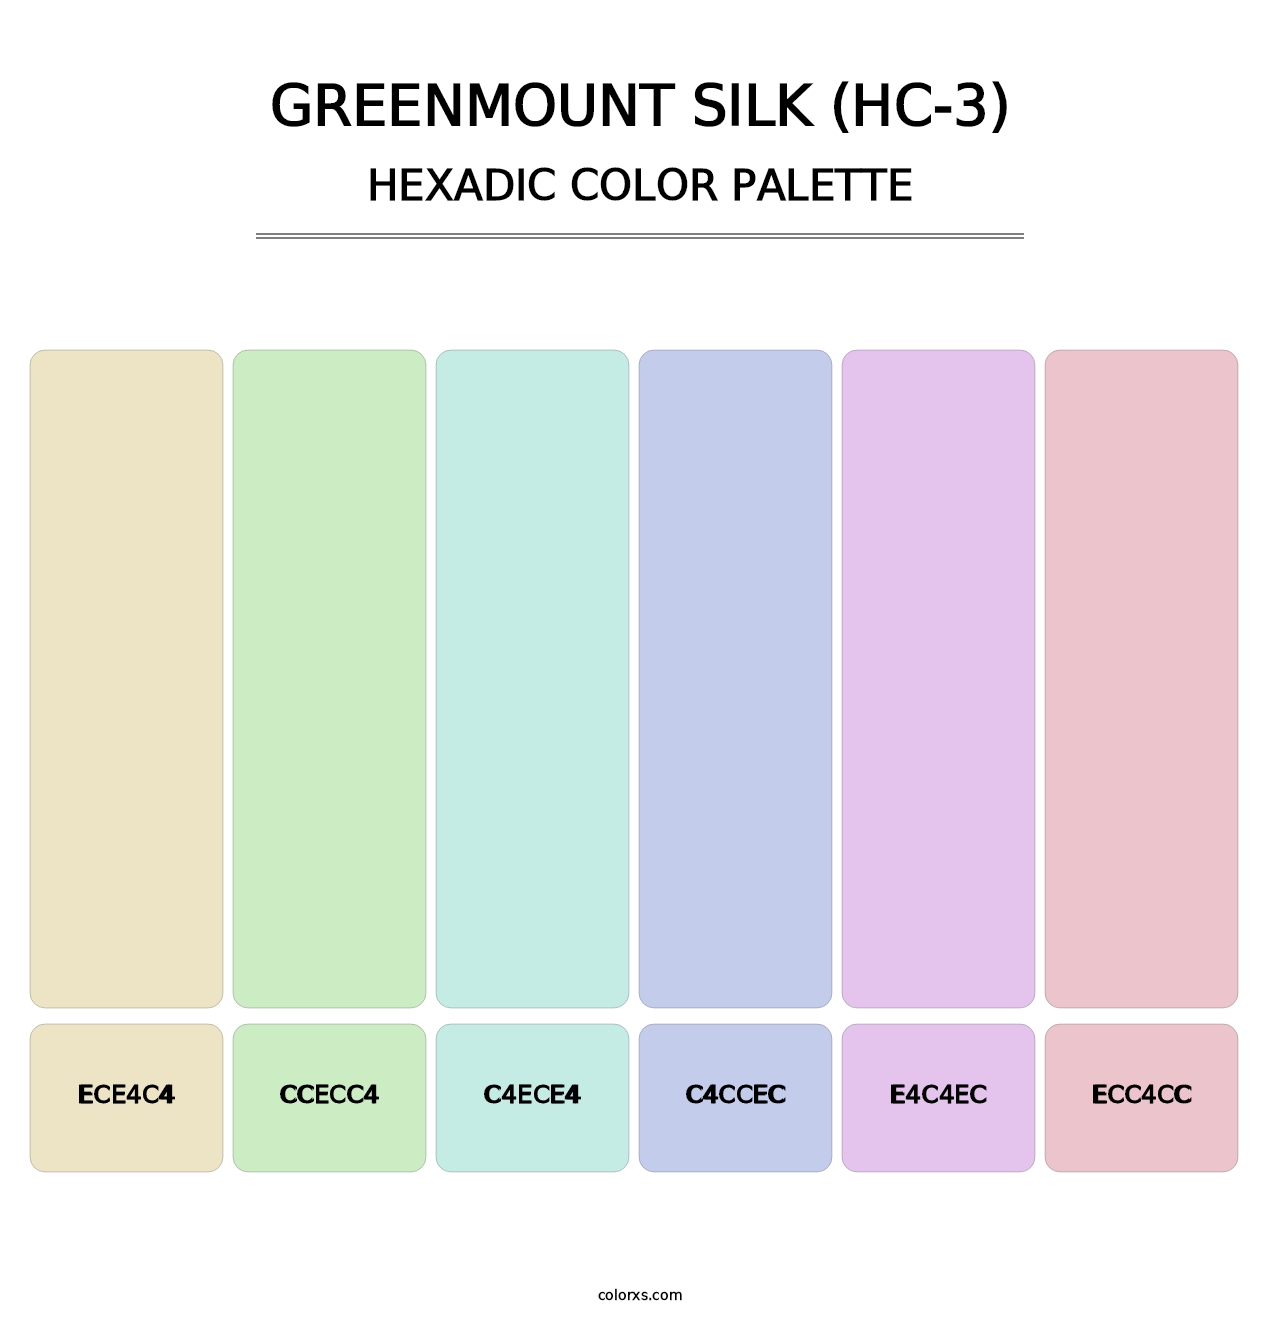 Greenmount Silk (HC-3) - Hexadic Color Palette